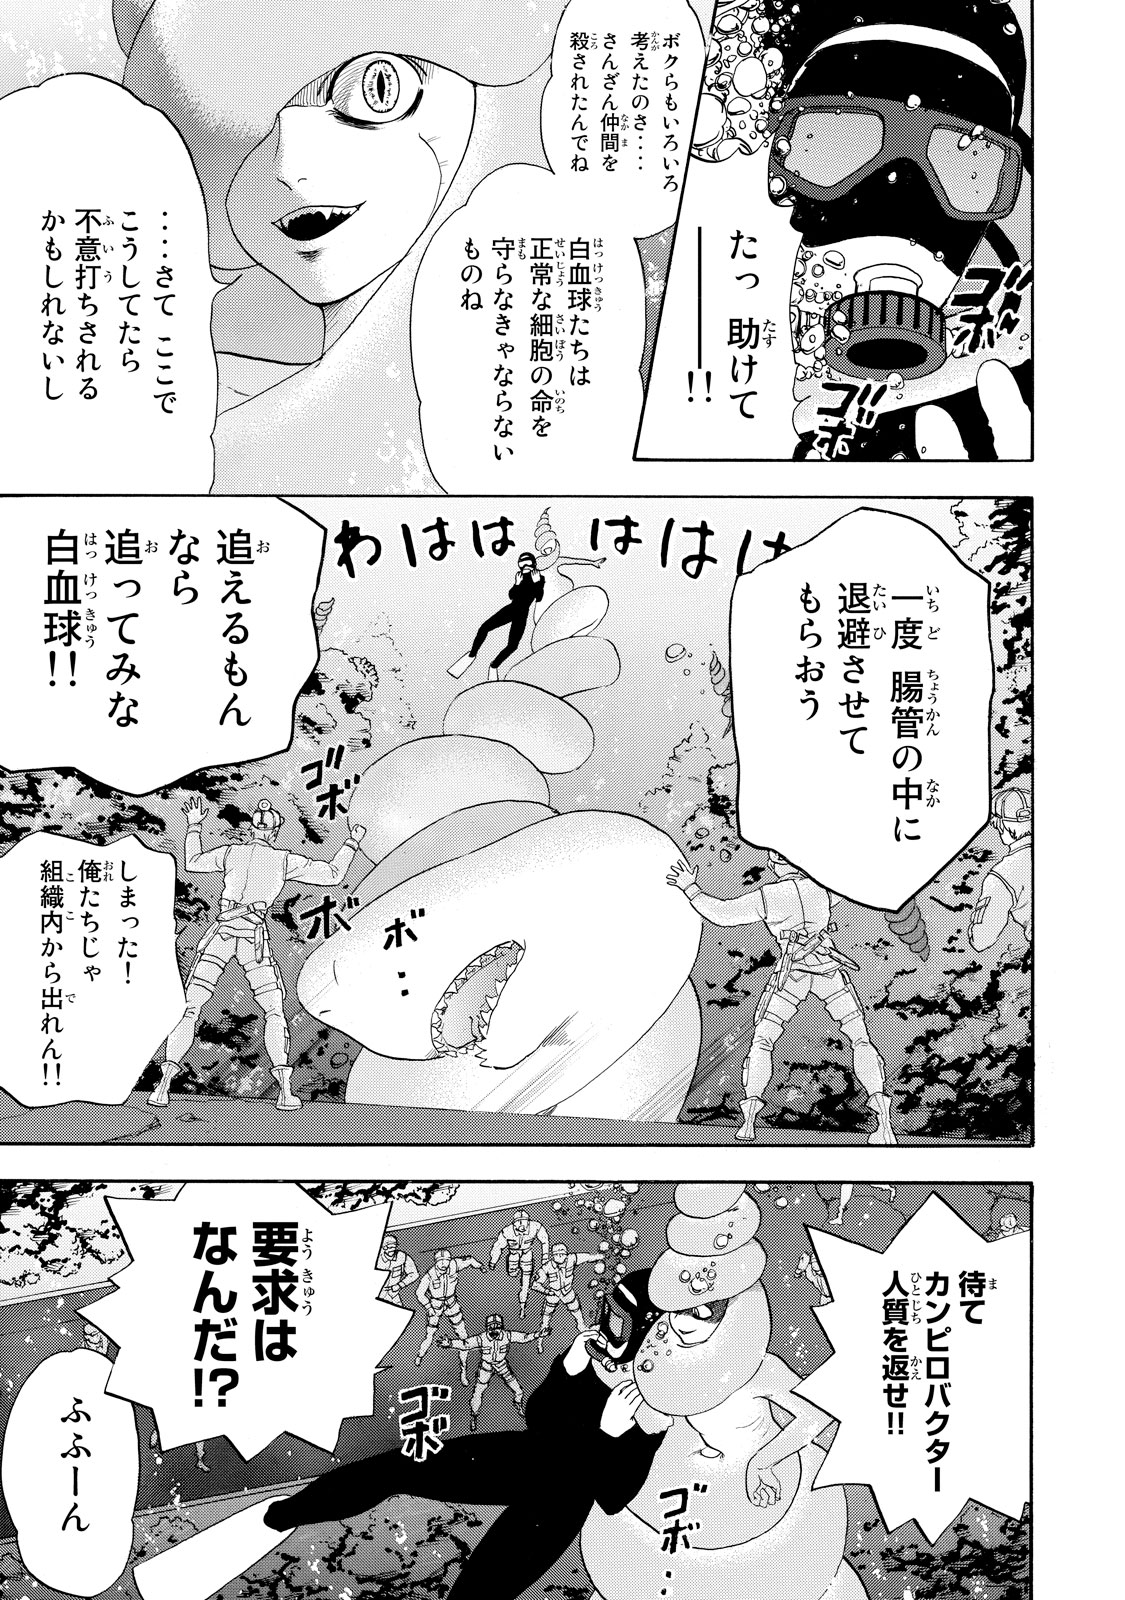 Hataraku Saibou - Chapter 19 - Page 9